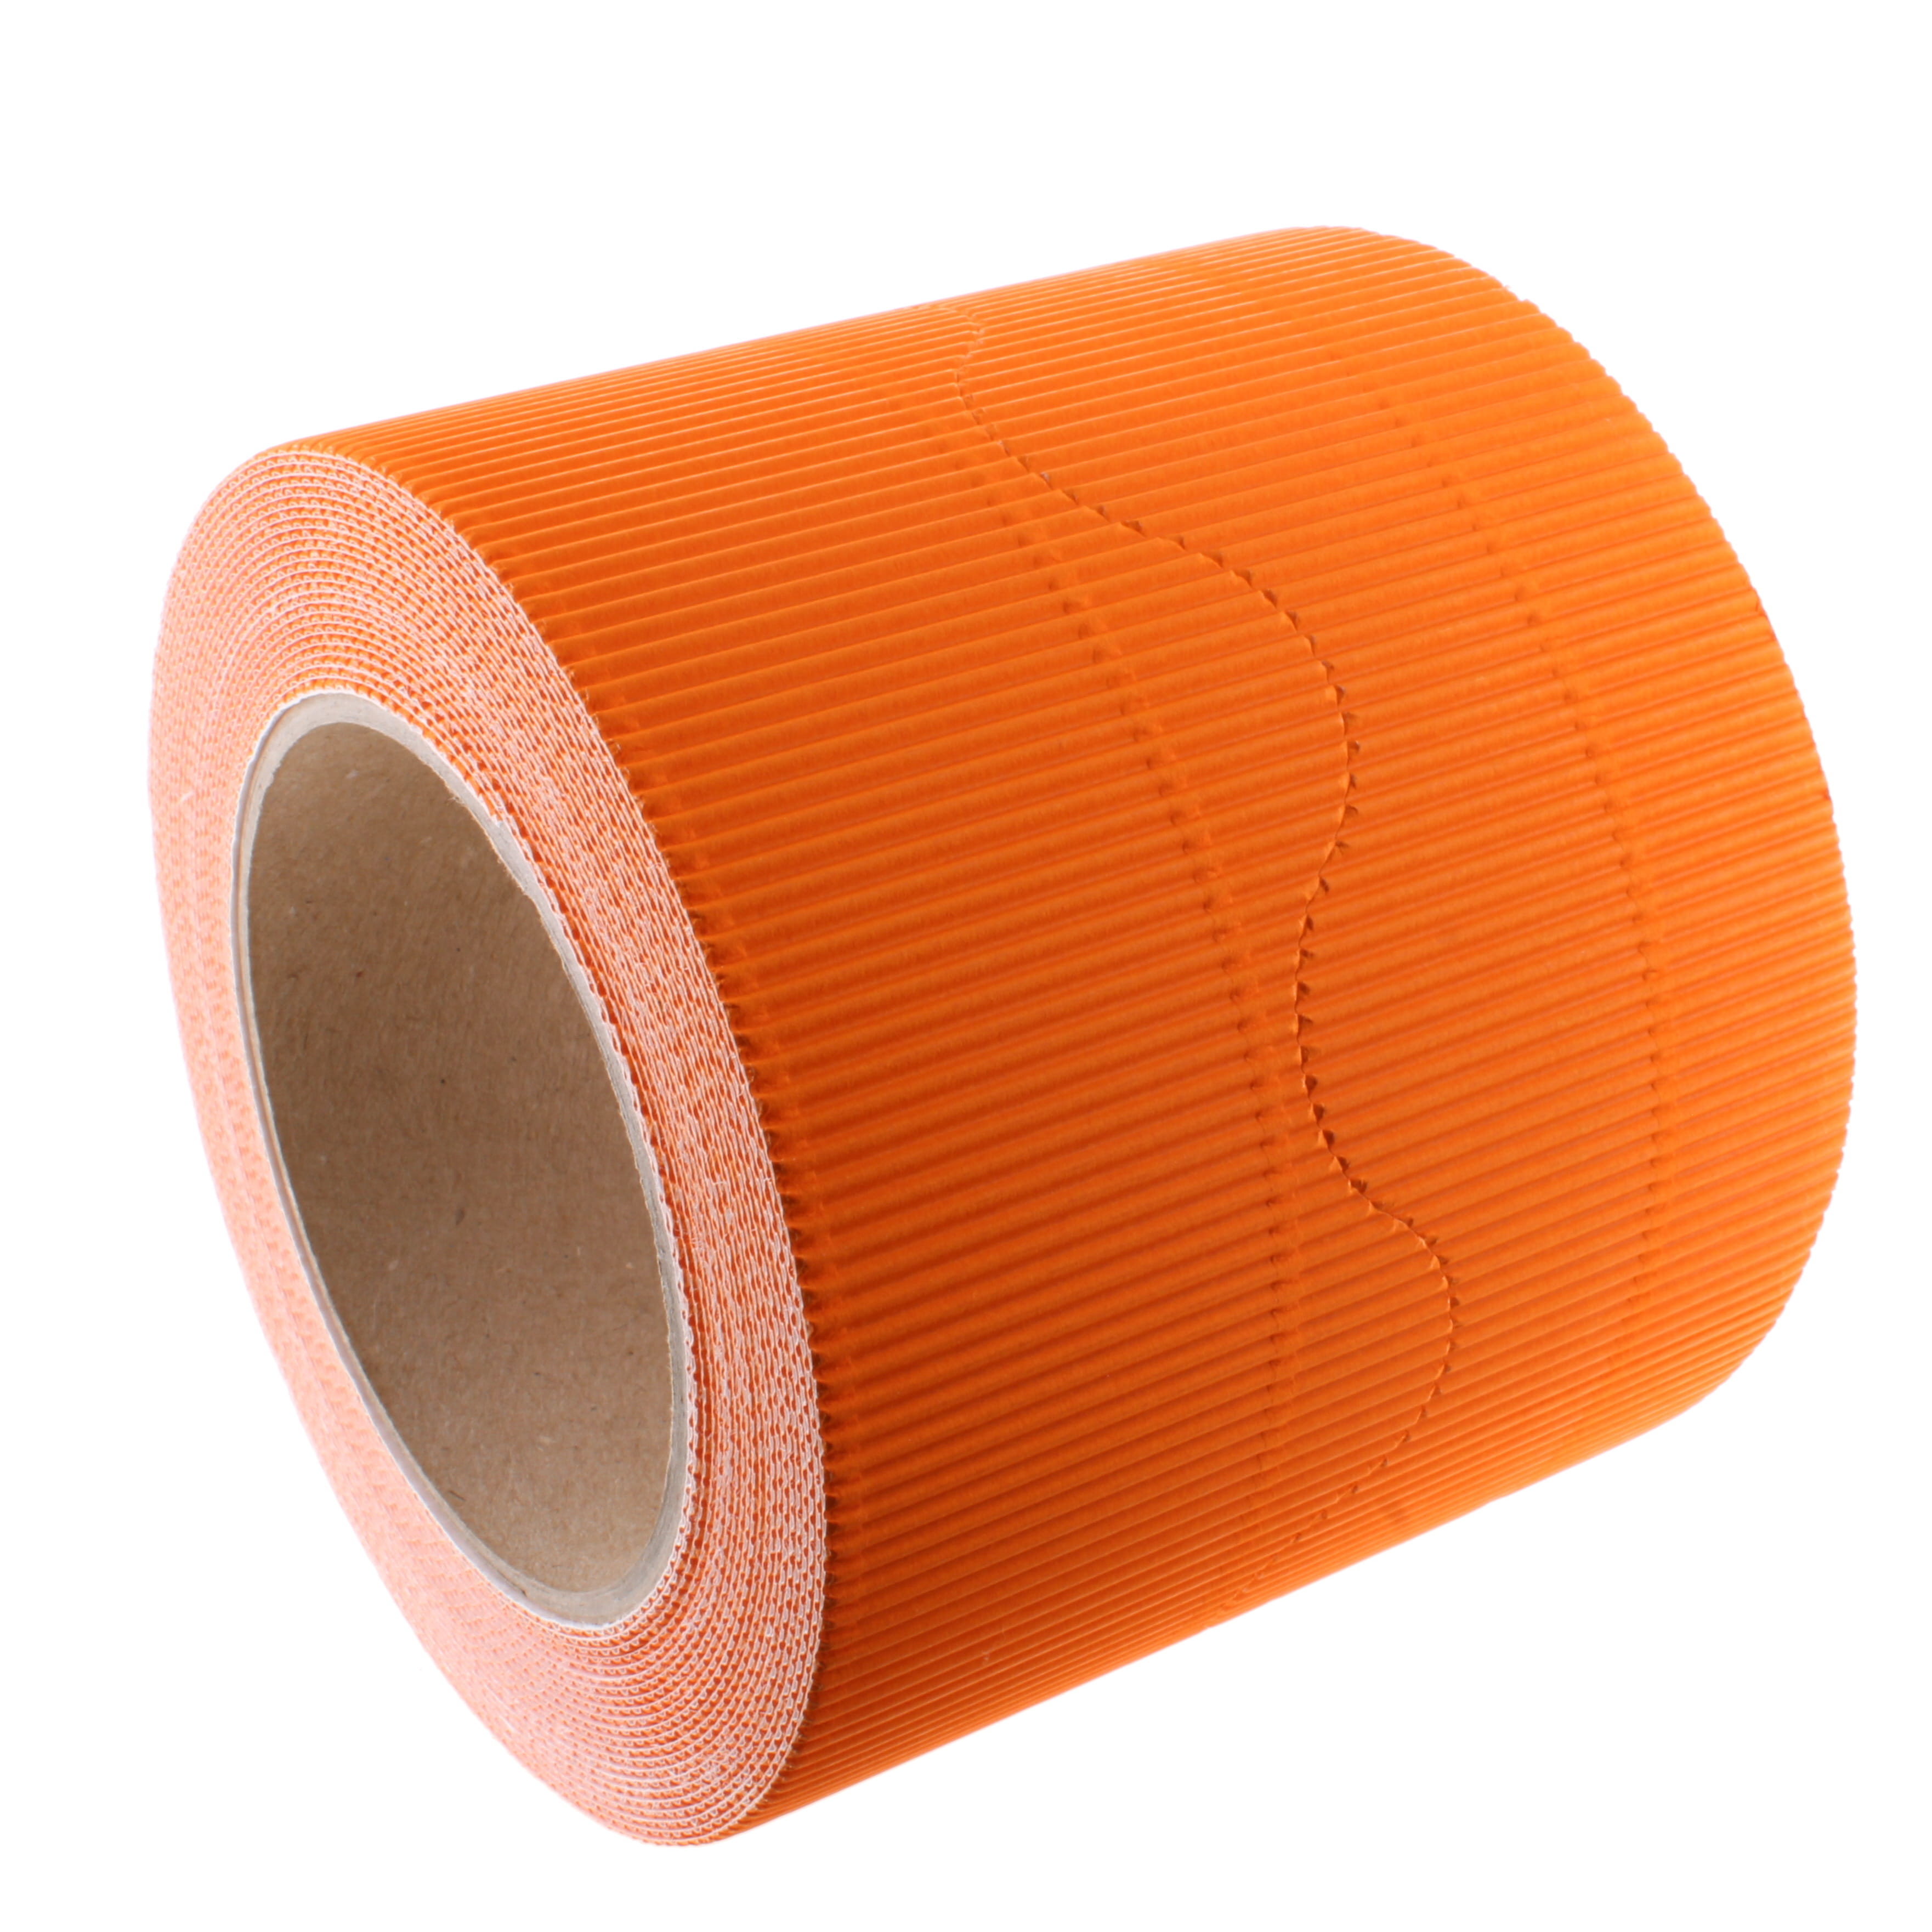 Border Rolls Corrugated Scalloped Orange 57mm x 7.5m - pack of 2